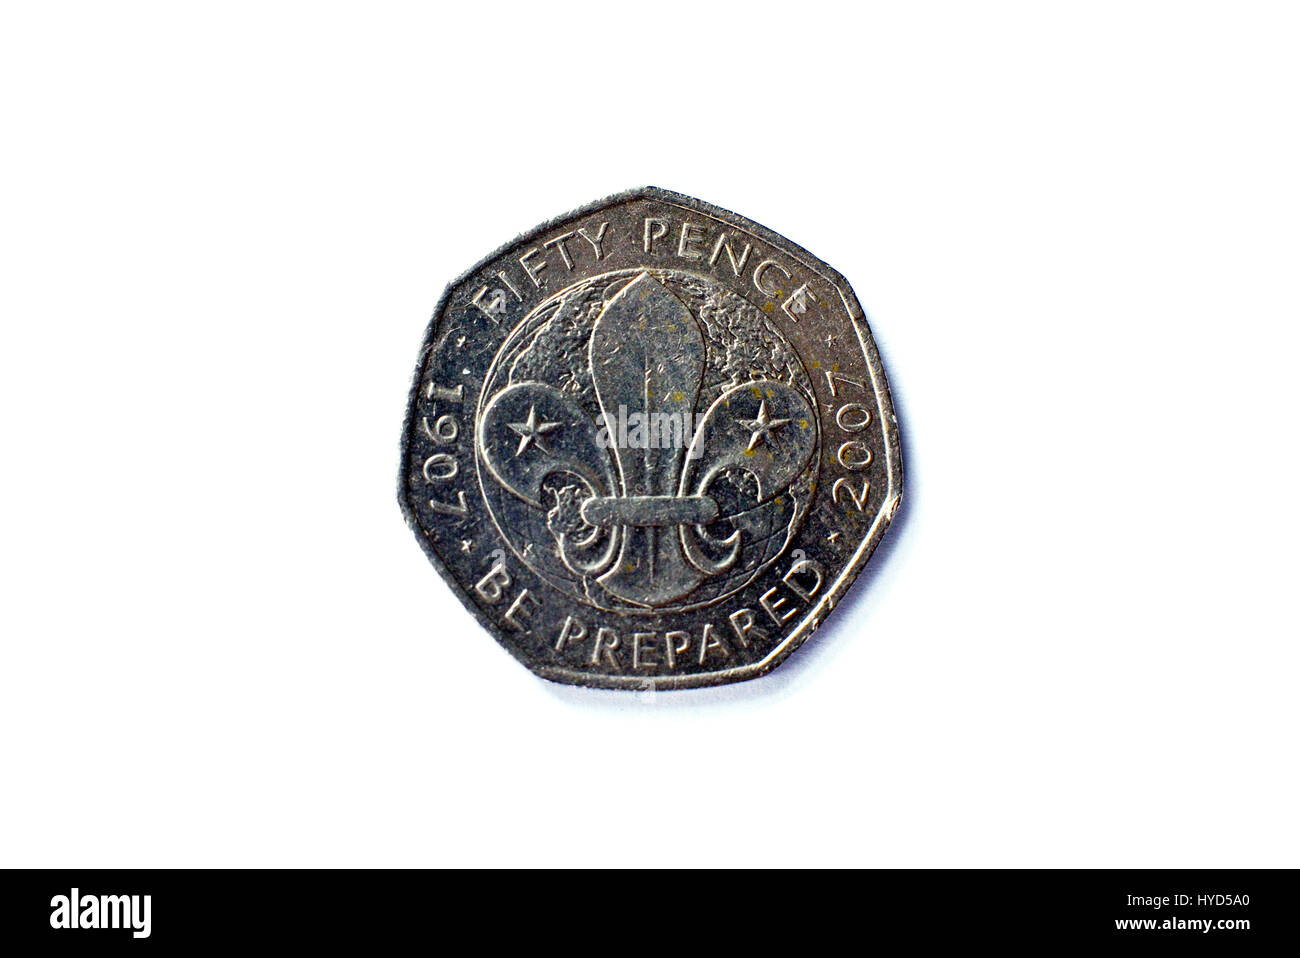 Unusual celebration 50 pence UK coin Stock Photo